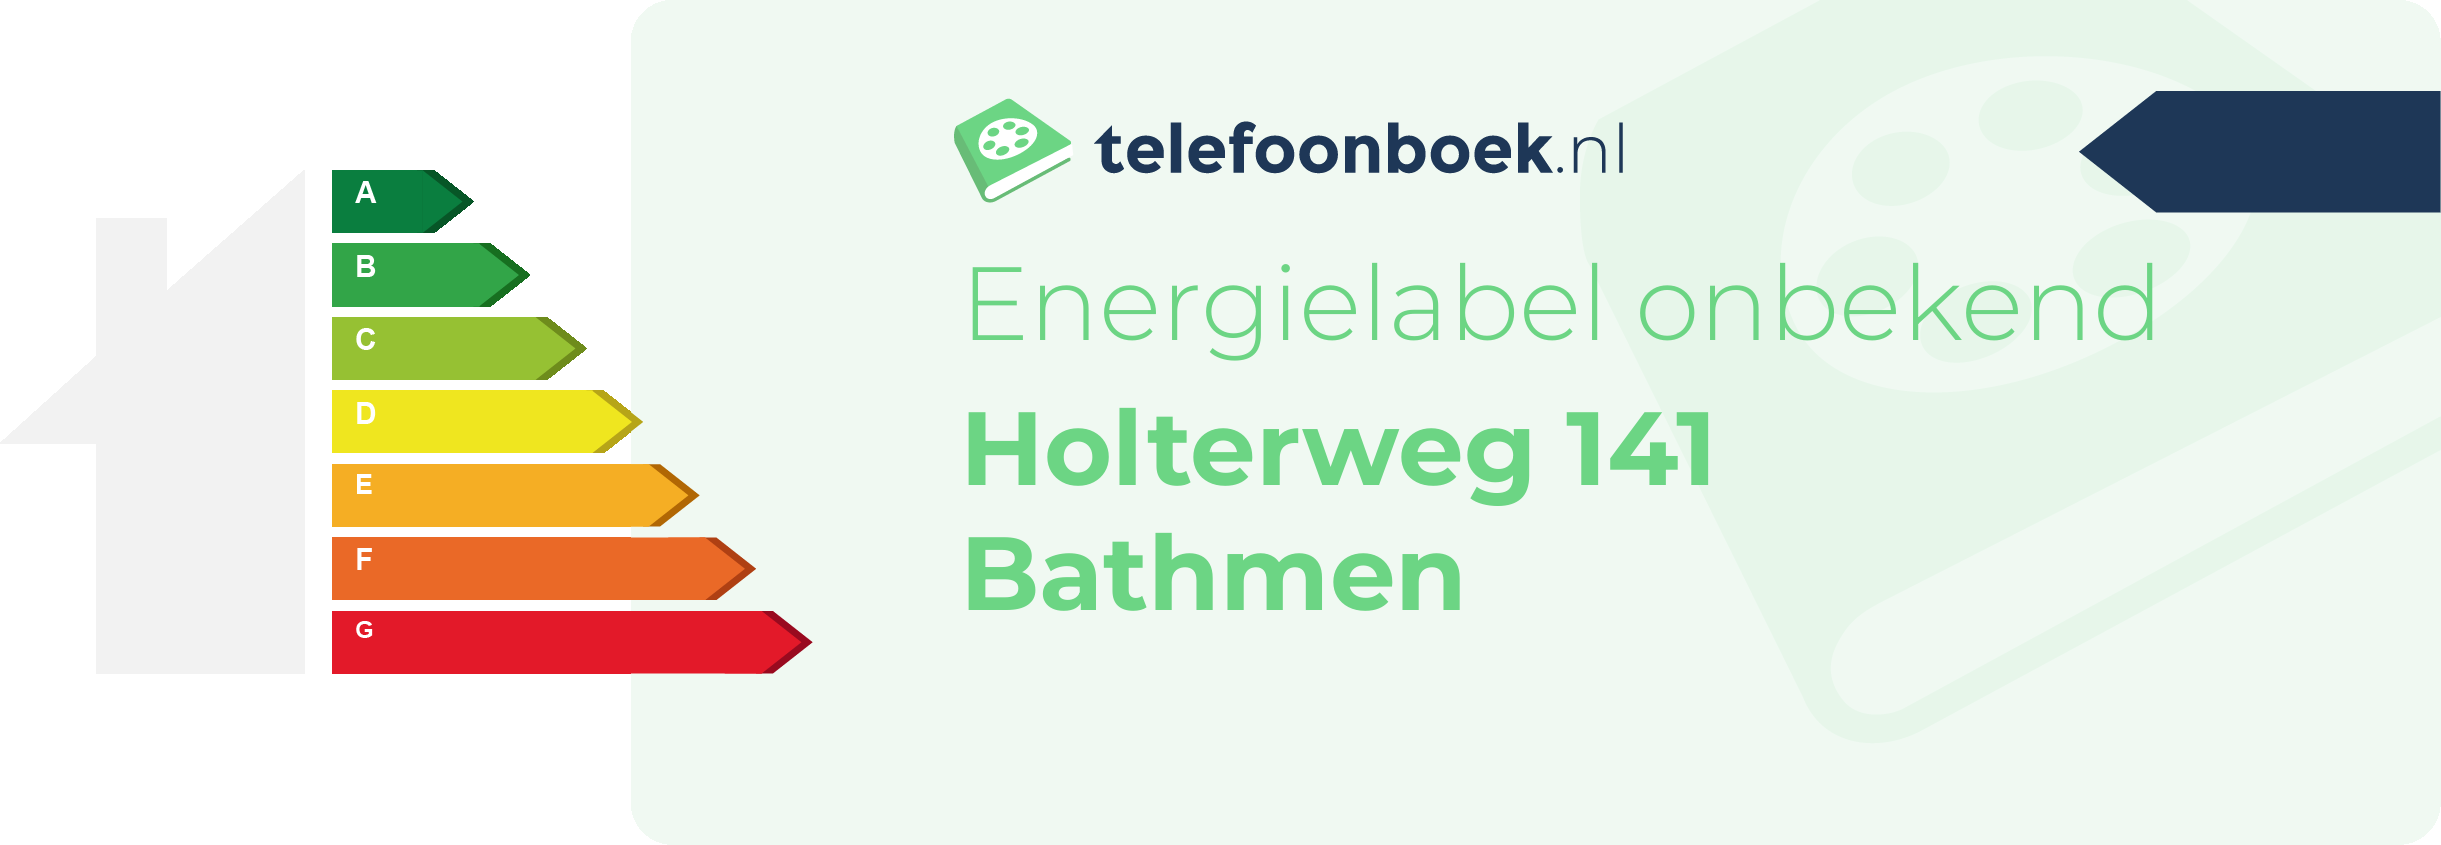 Energielabel Holterweg 141 Bathmen